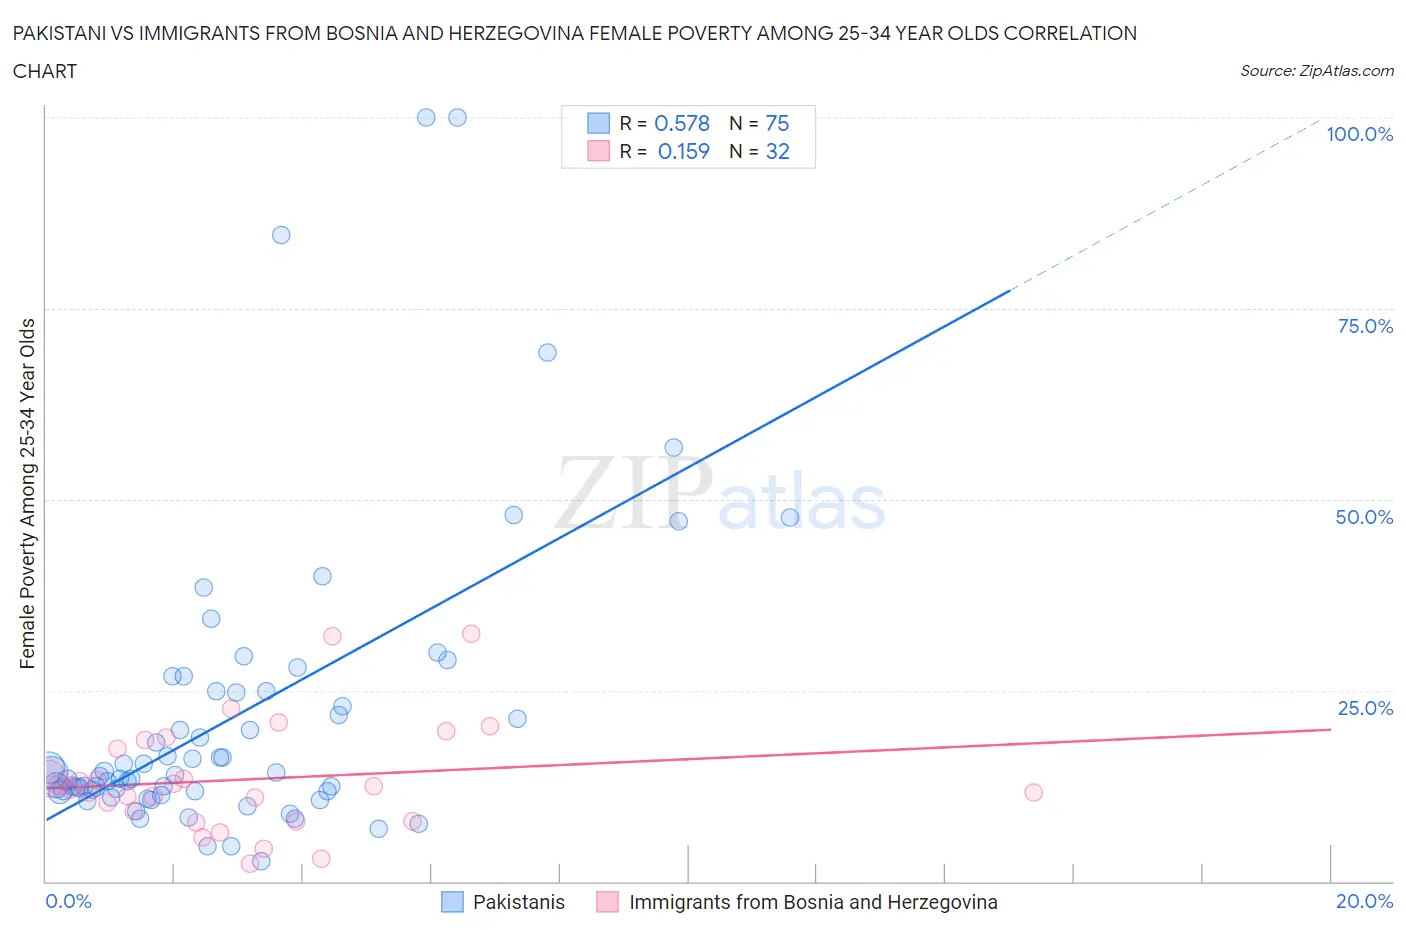 Pakistani vs Immigrants from Bosnia and Herzegovina Female Poverty Among 25-34 Year Olds